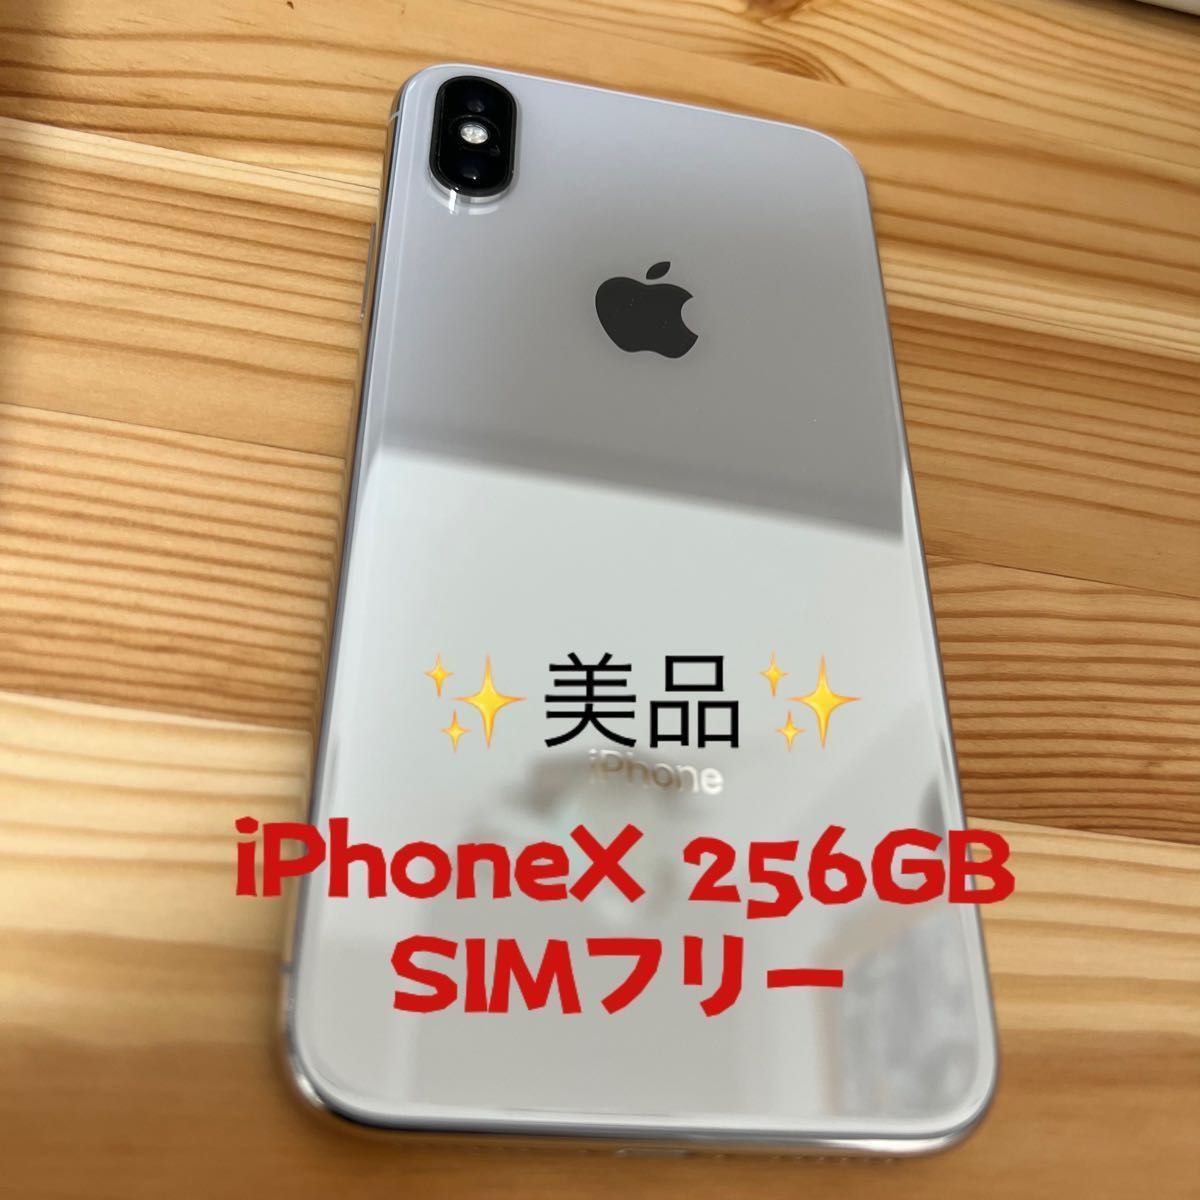 iPhoneX 256gb シルバー SIMロックあり docomo 83% スマートフォン 